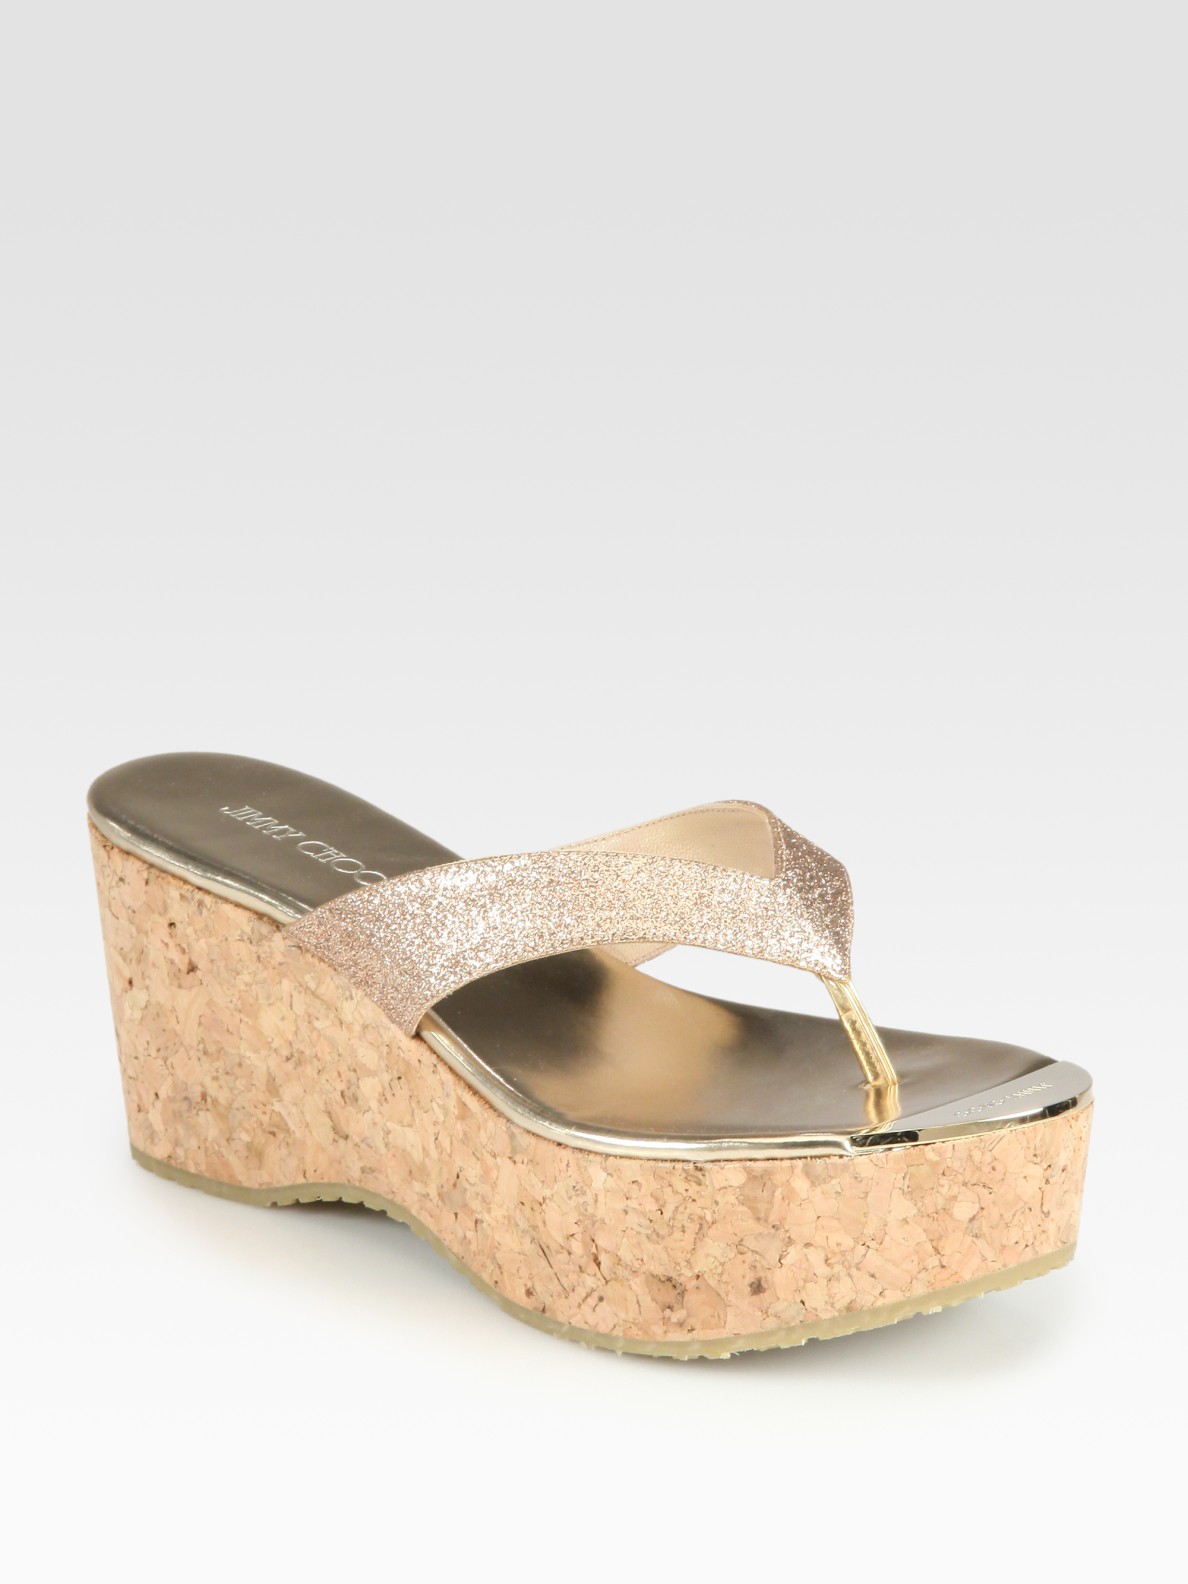 Jimmy choo Pathos Glitter Cork Wedge Sandals in Natural | Lyst